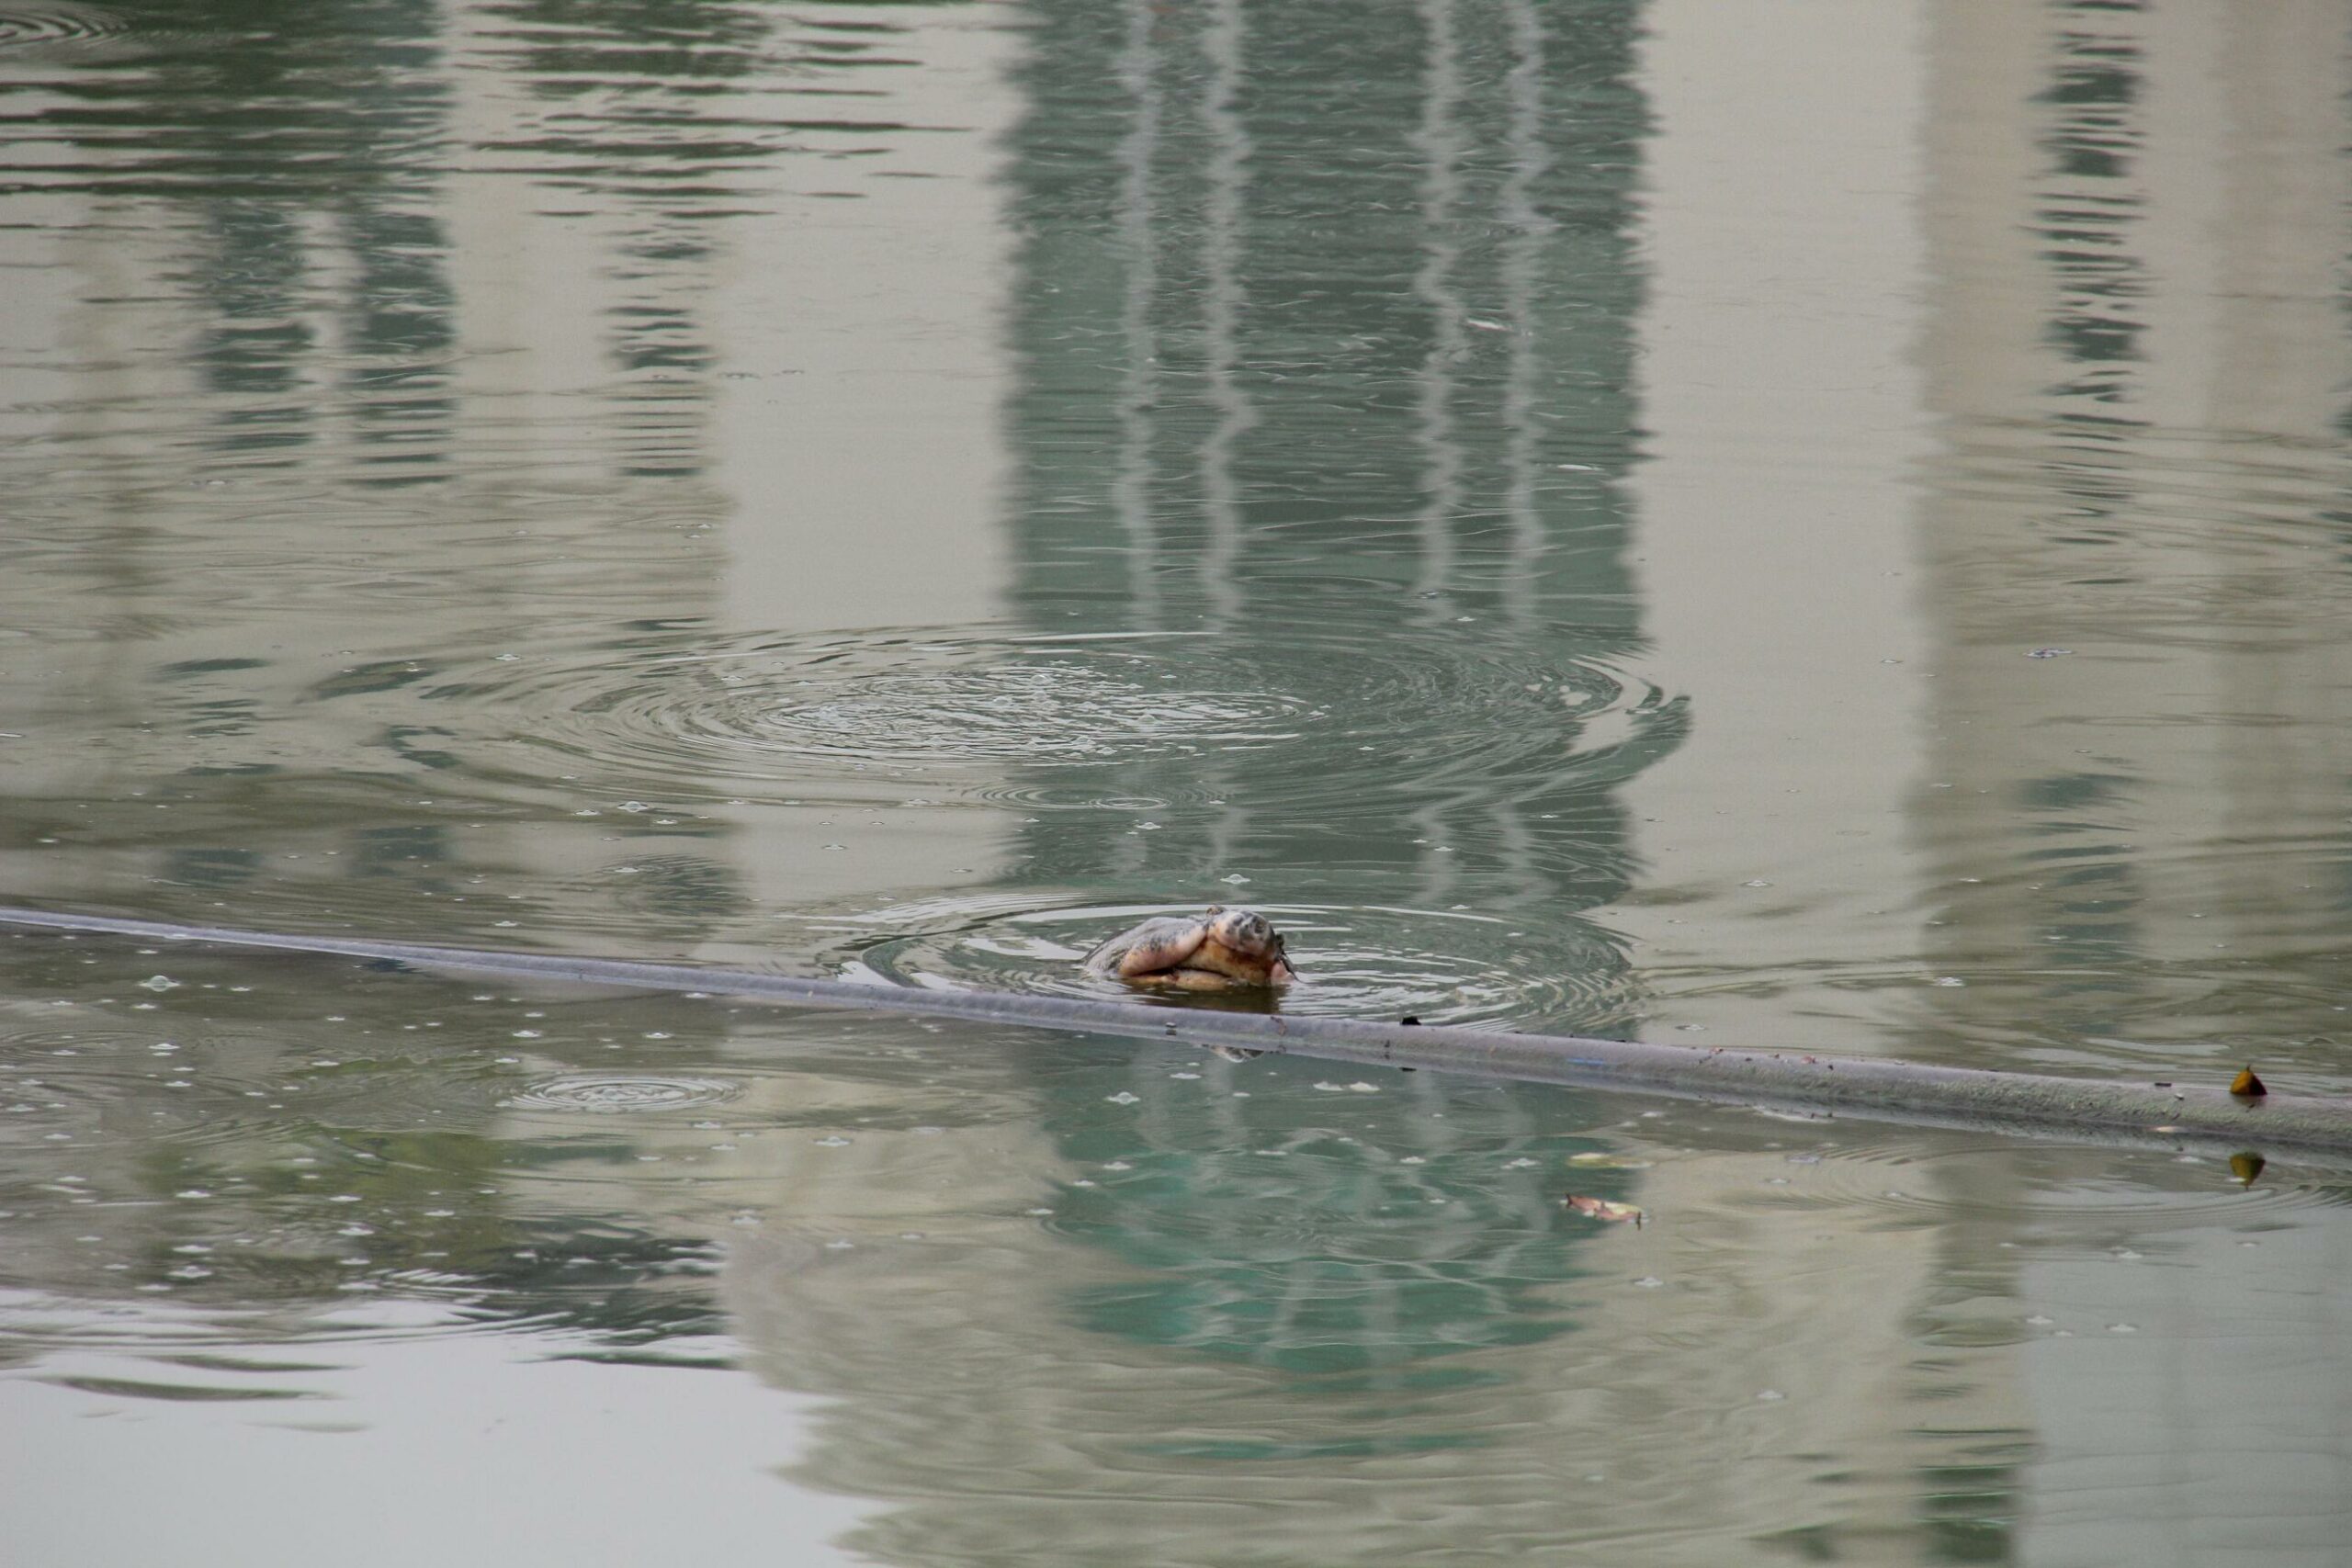 The Hoan Kiem turtle surfaces in Hanoi's Green Lake.